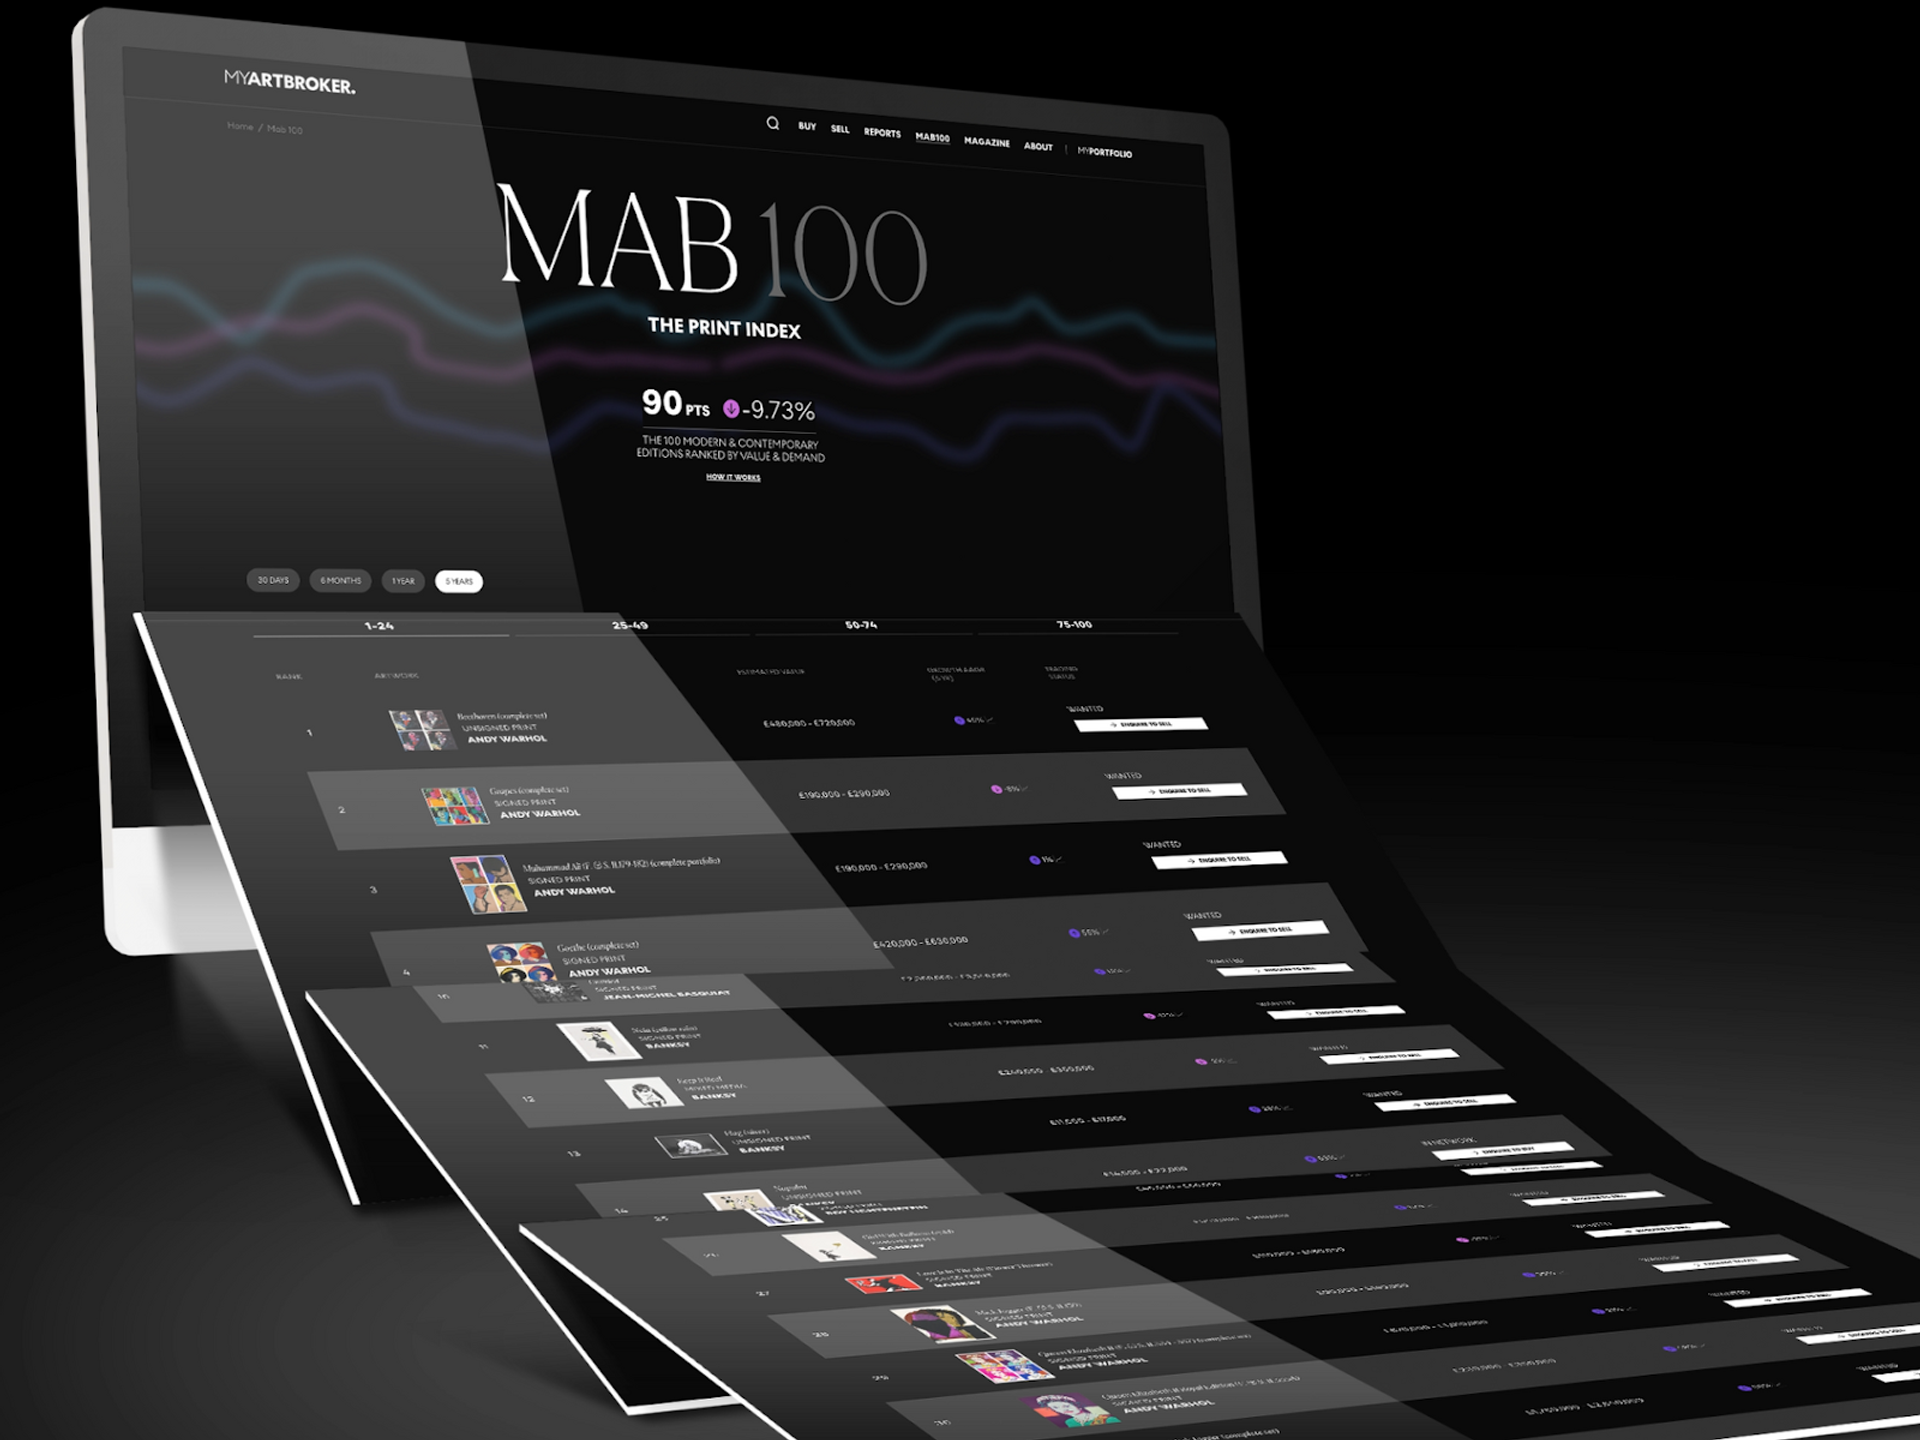 MyArtBroker's MAB 100 Print Market Index on a digital screen